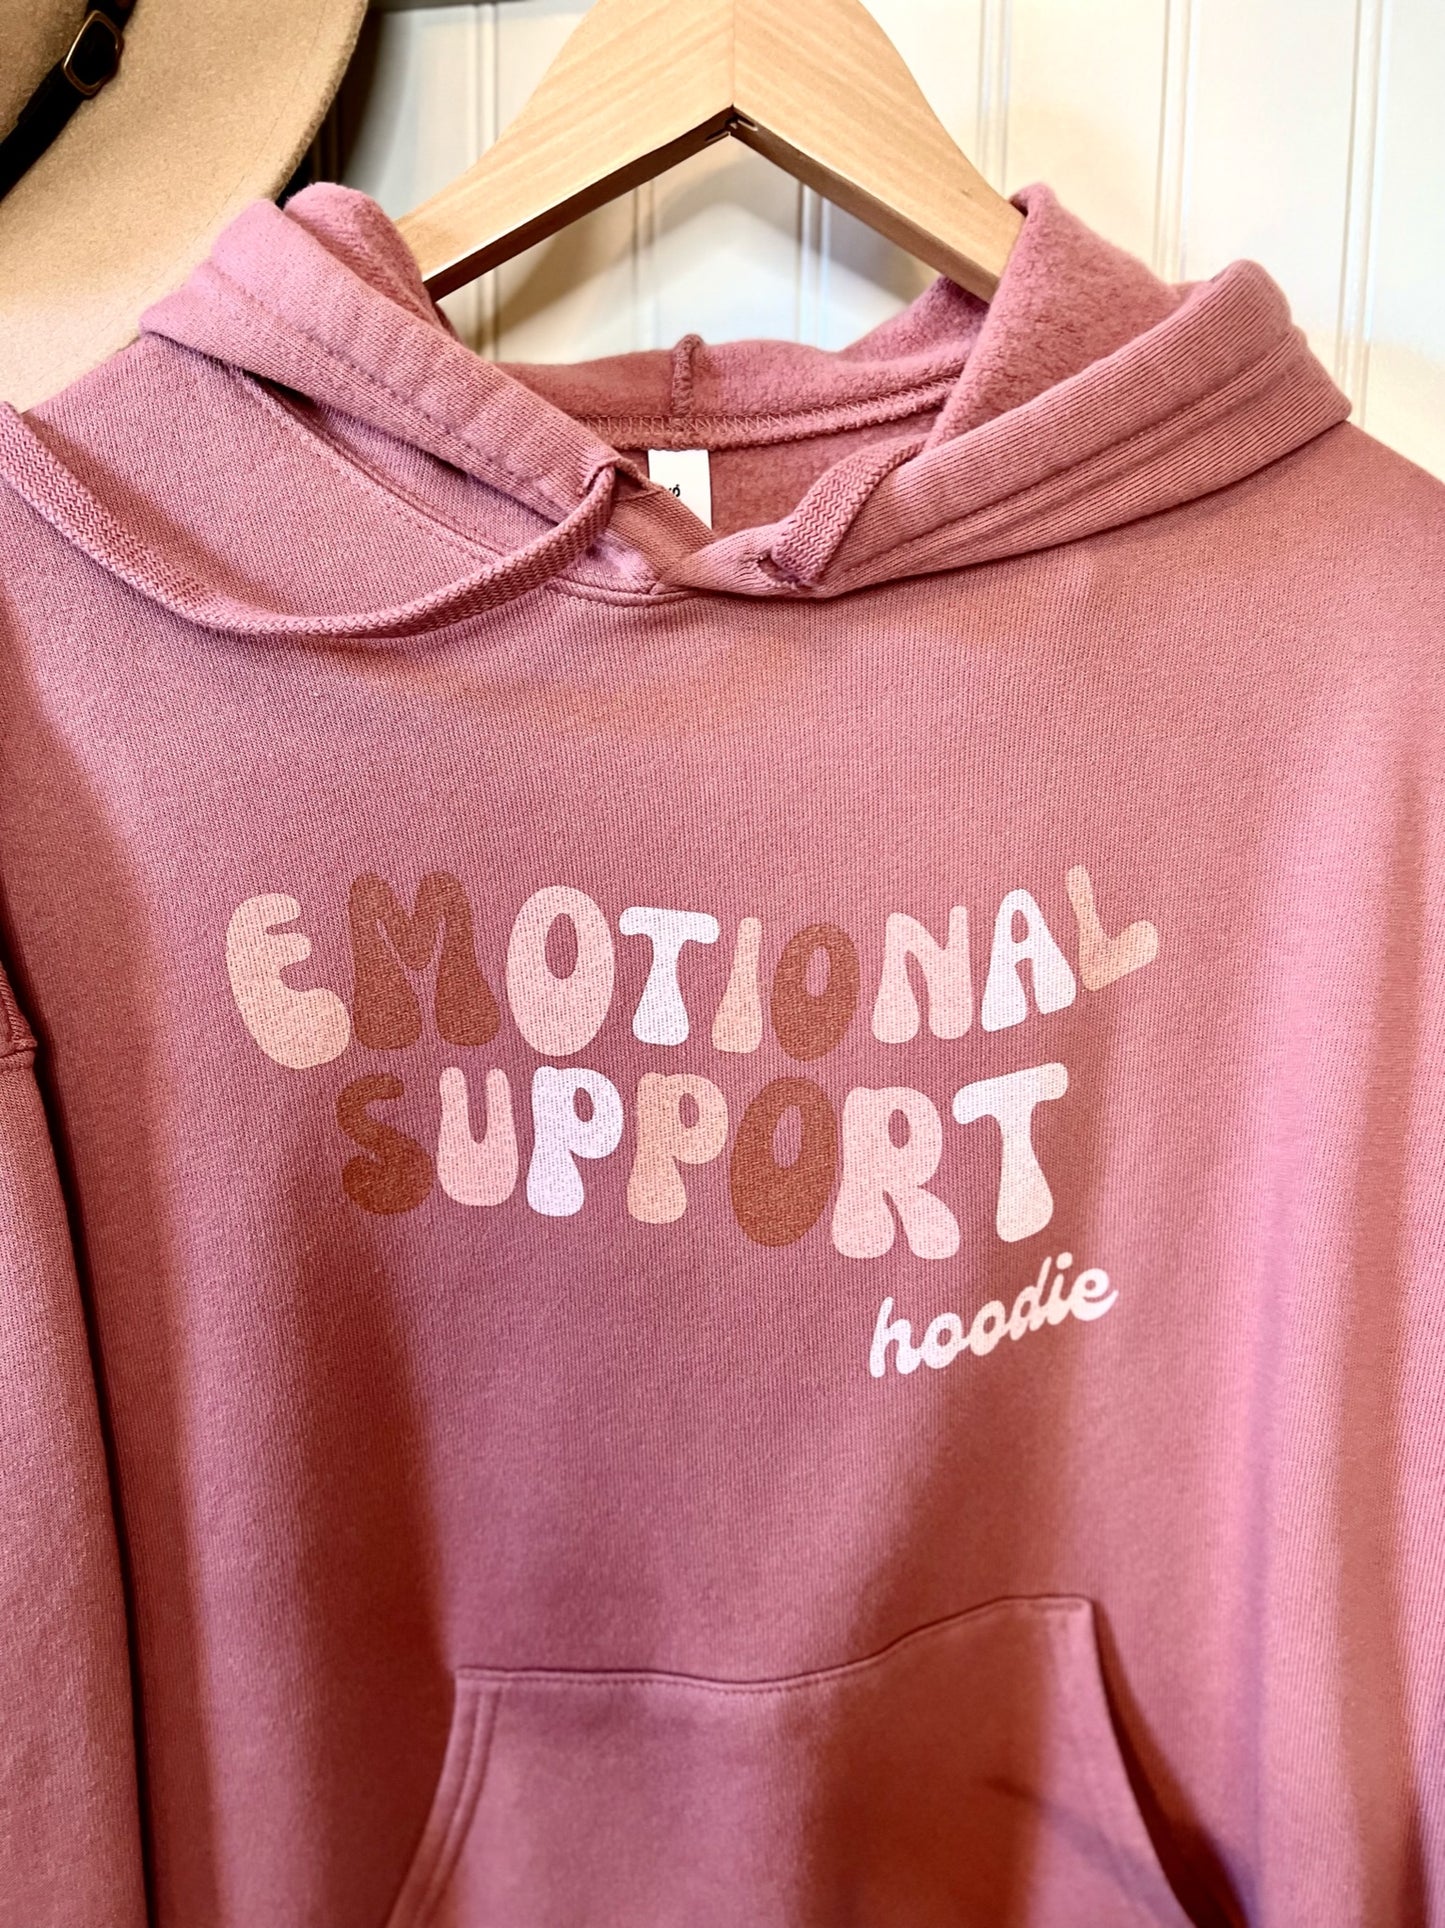 Emotional Support Hoodie - Retro